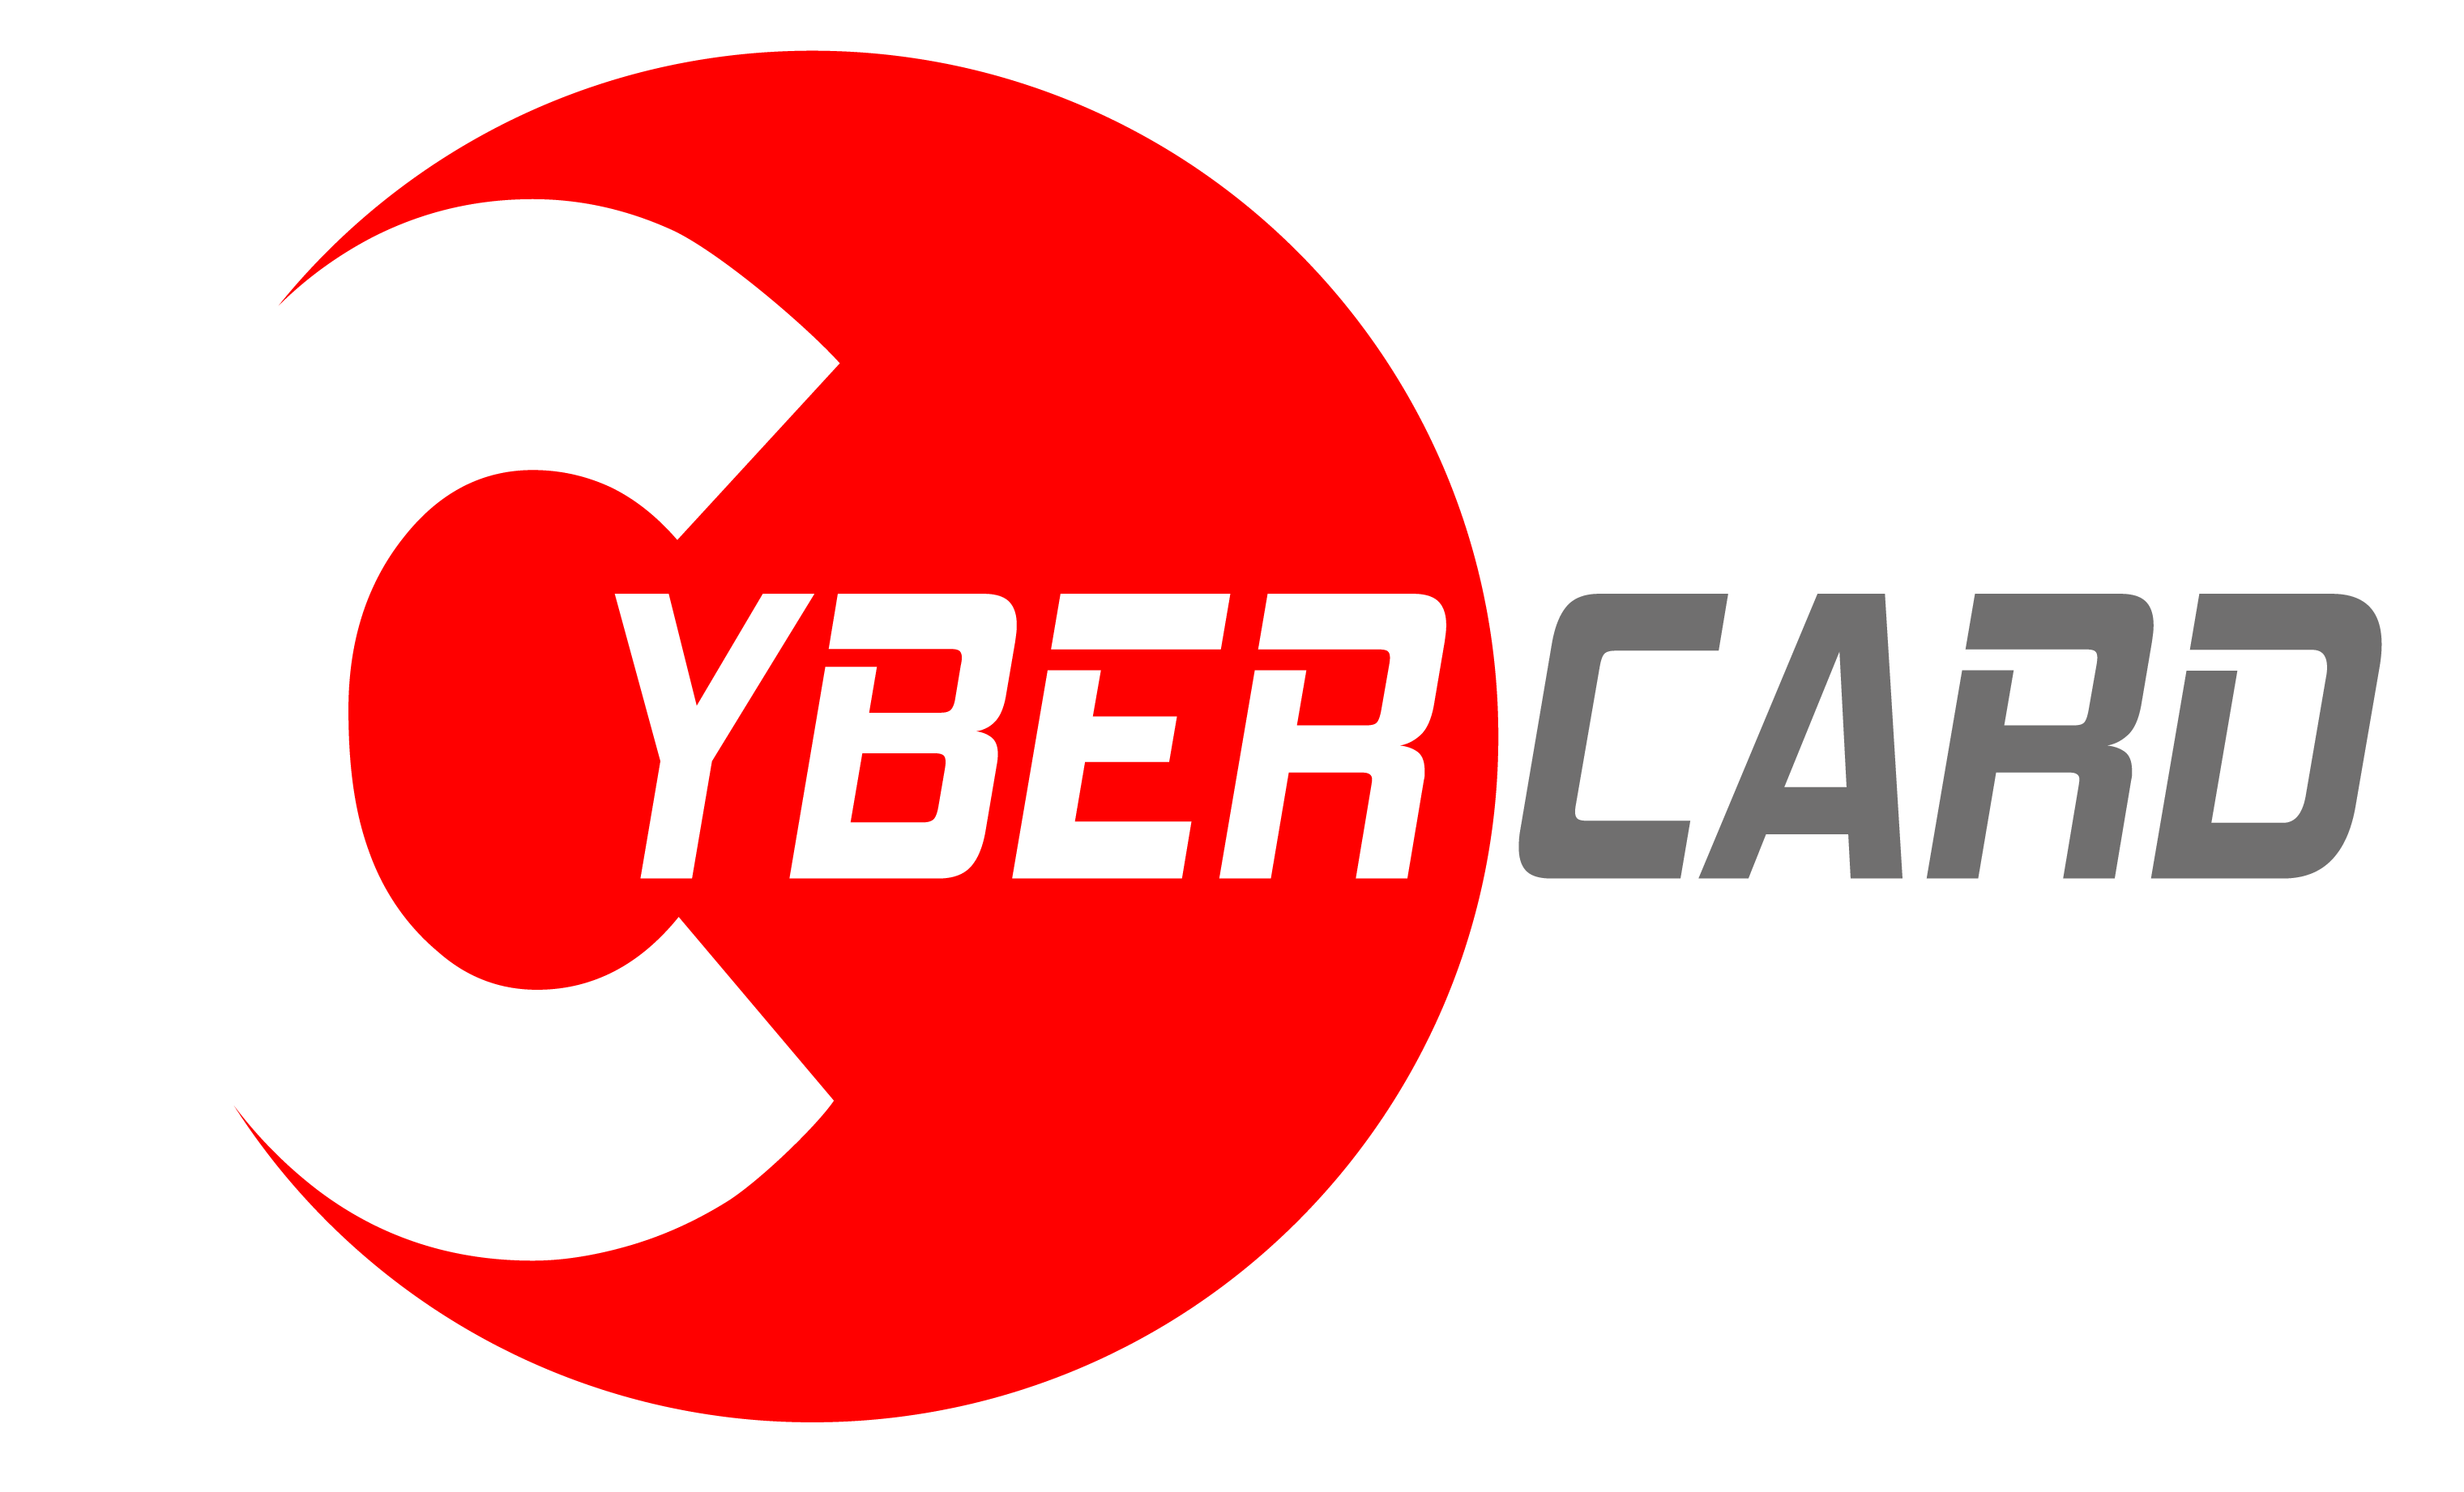 CyberCard